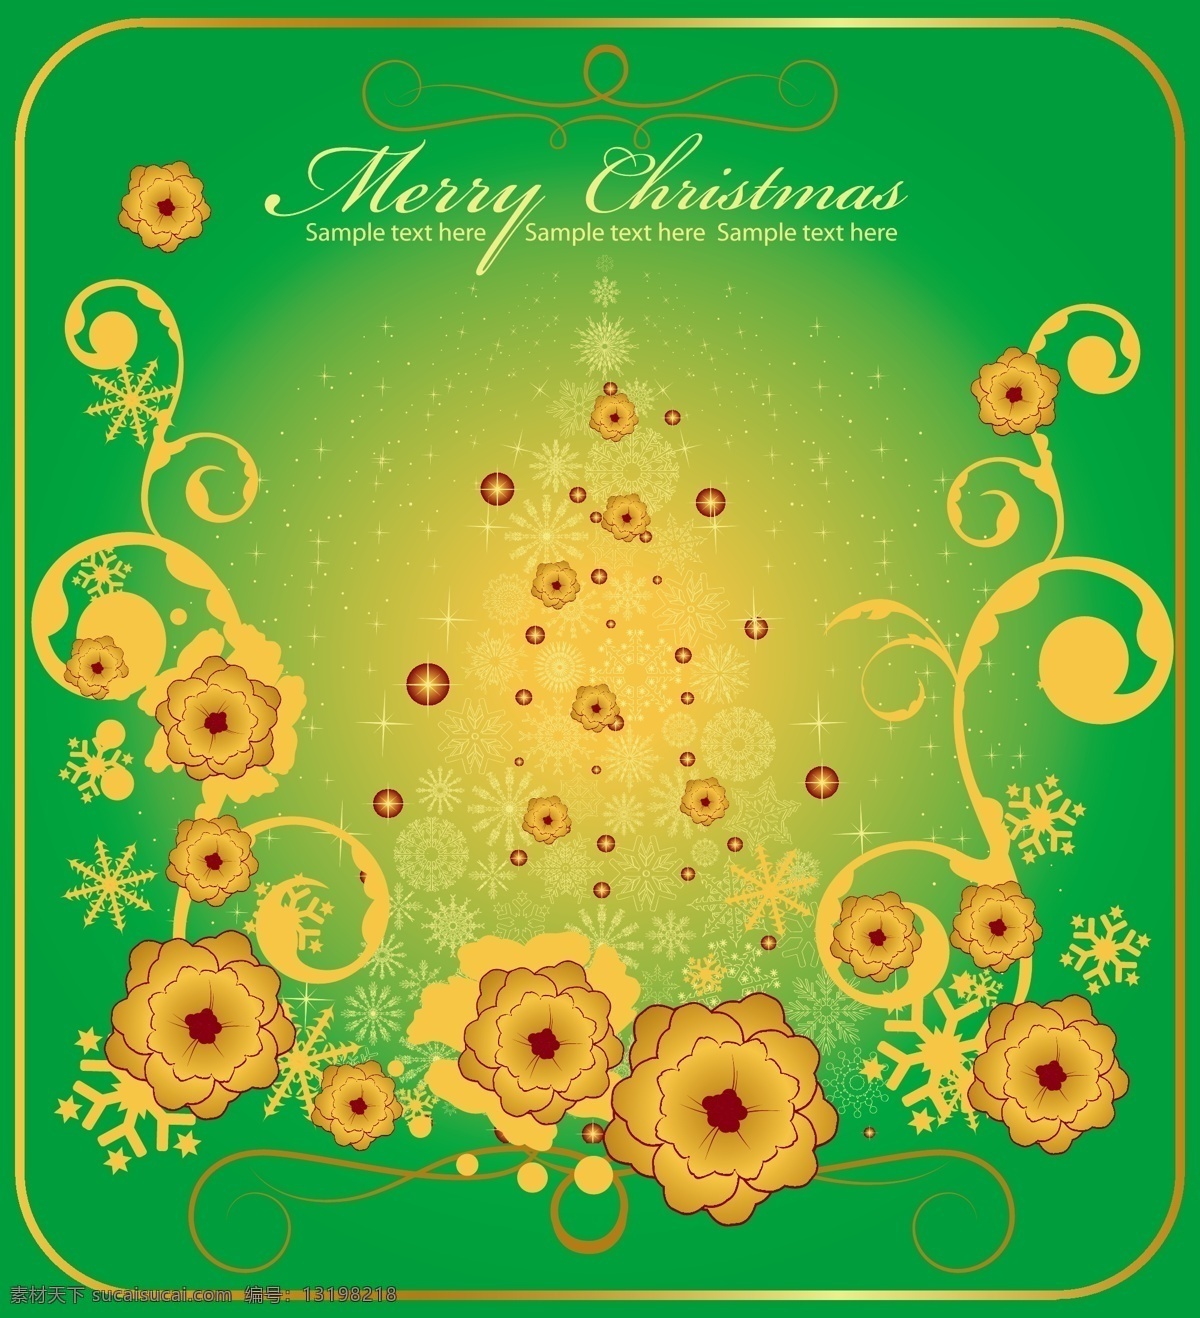 sxzj首发 圣诞节 花纹 款式 2009 红色 花朵 金色 蜡烛 礼物 绿色 闪光 圣诞树 矢量圣诞节 铜铃 雪花 挂球 圆 矢量素材 sxzj 节日素材